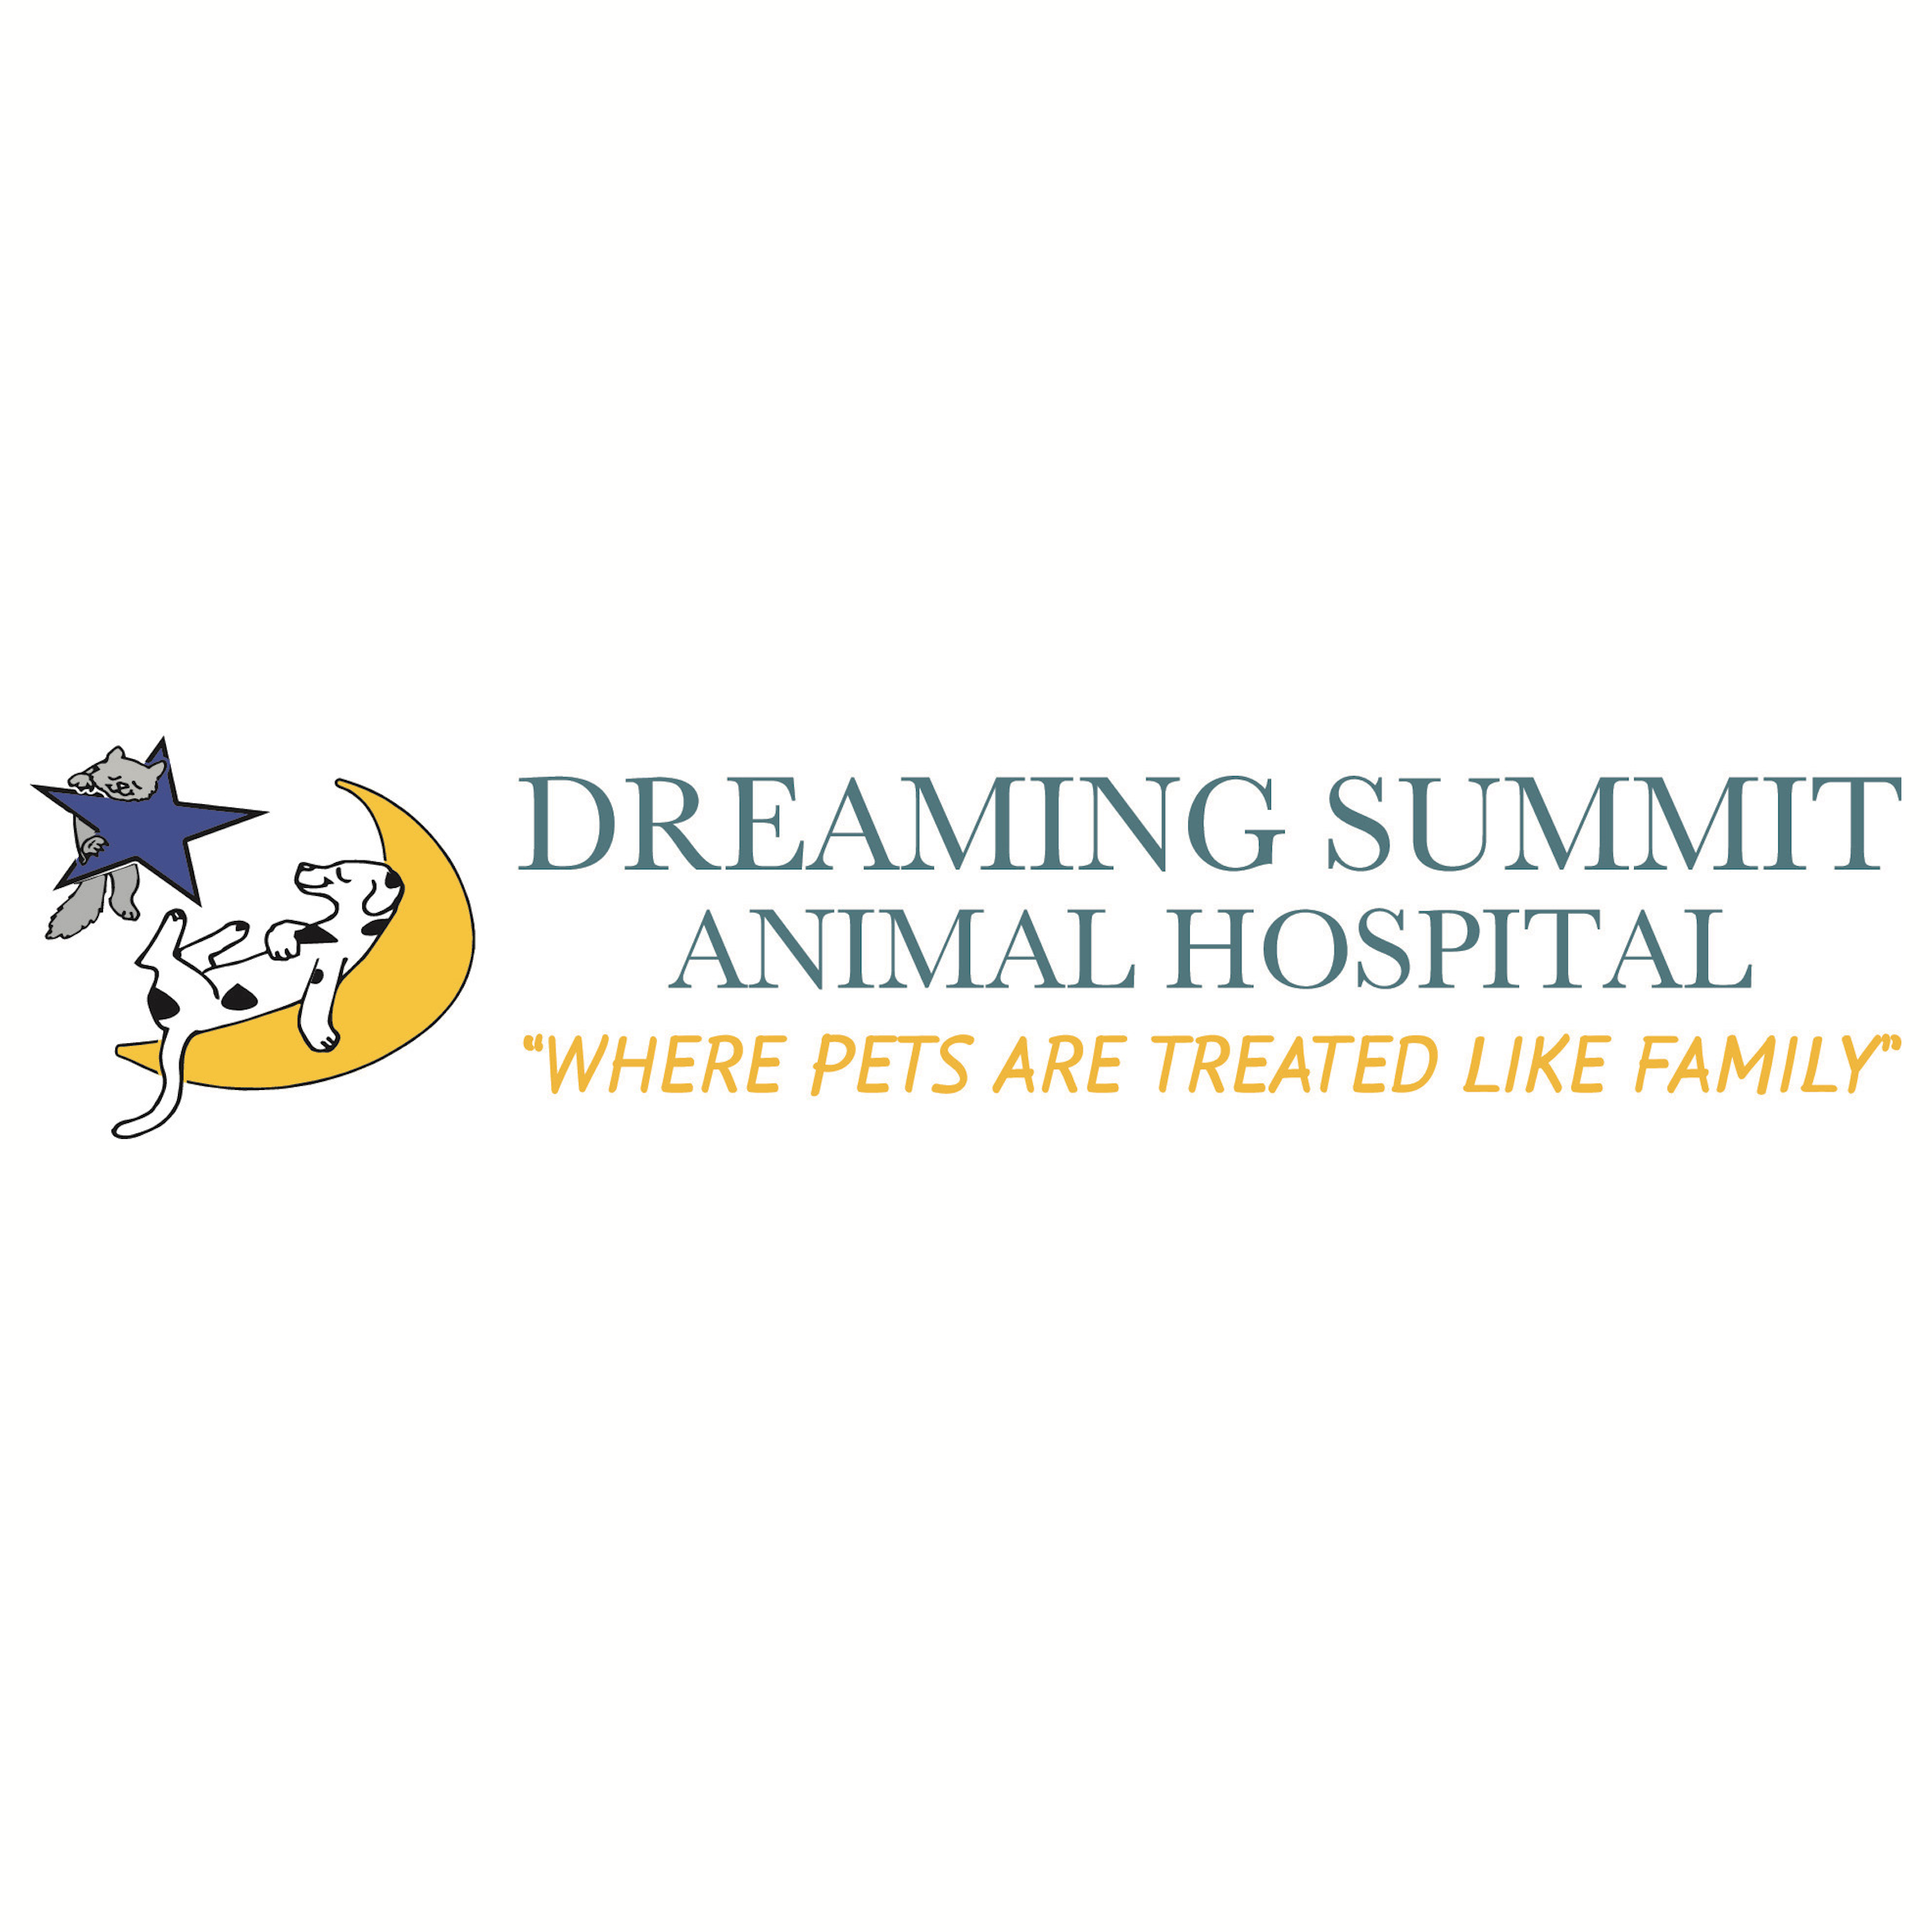 Dreaming Summit Animal Hospital